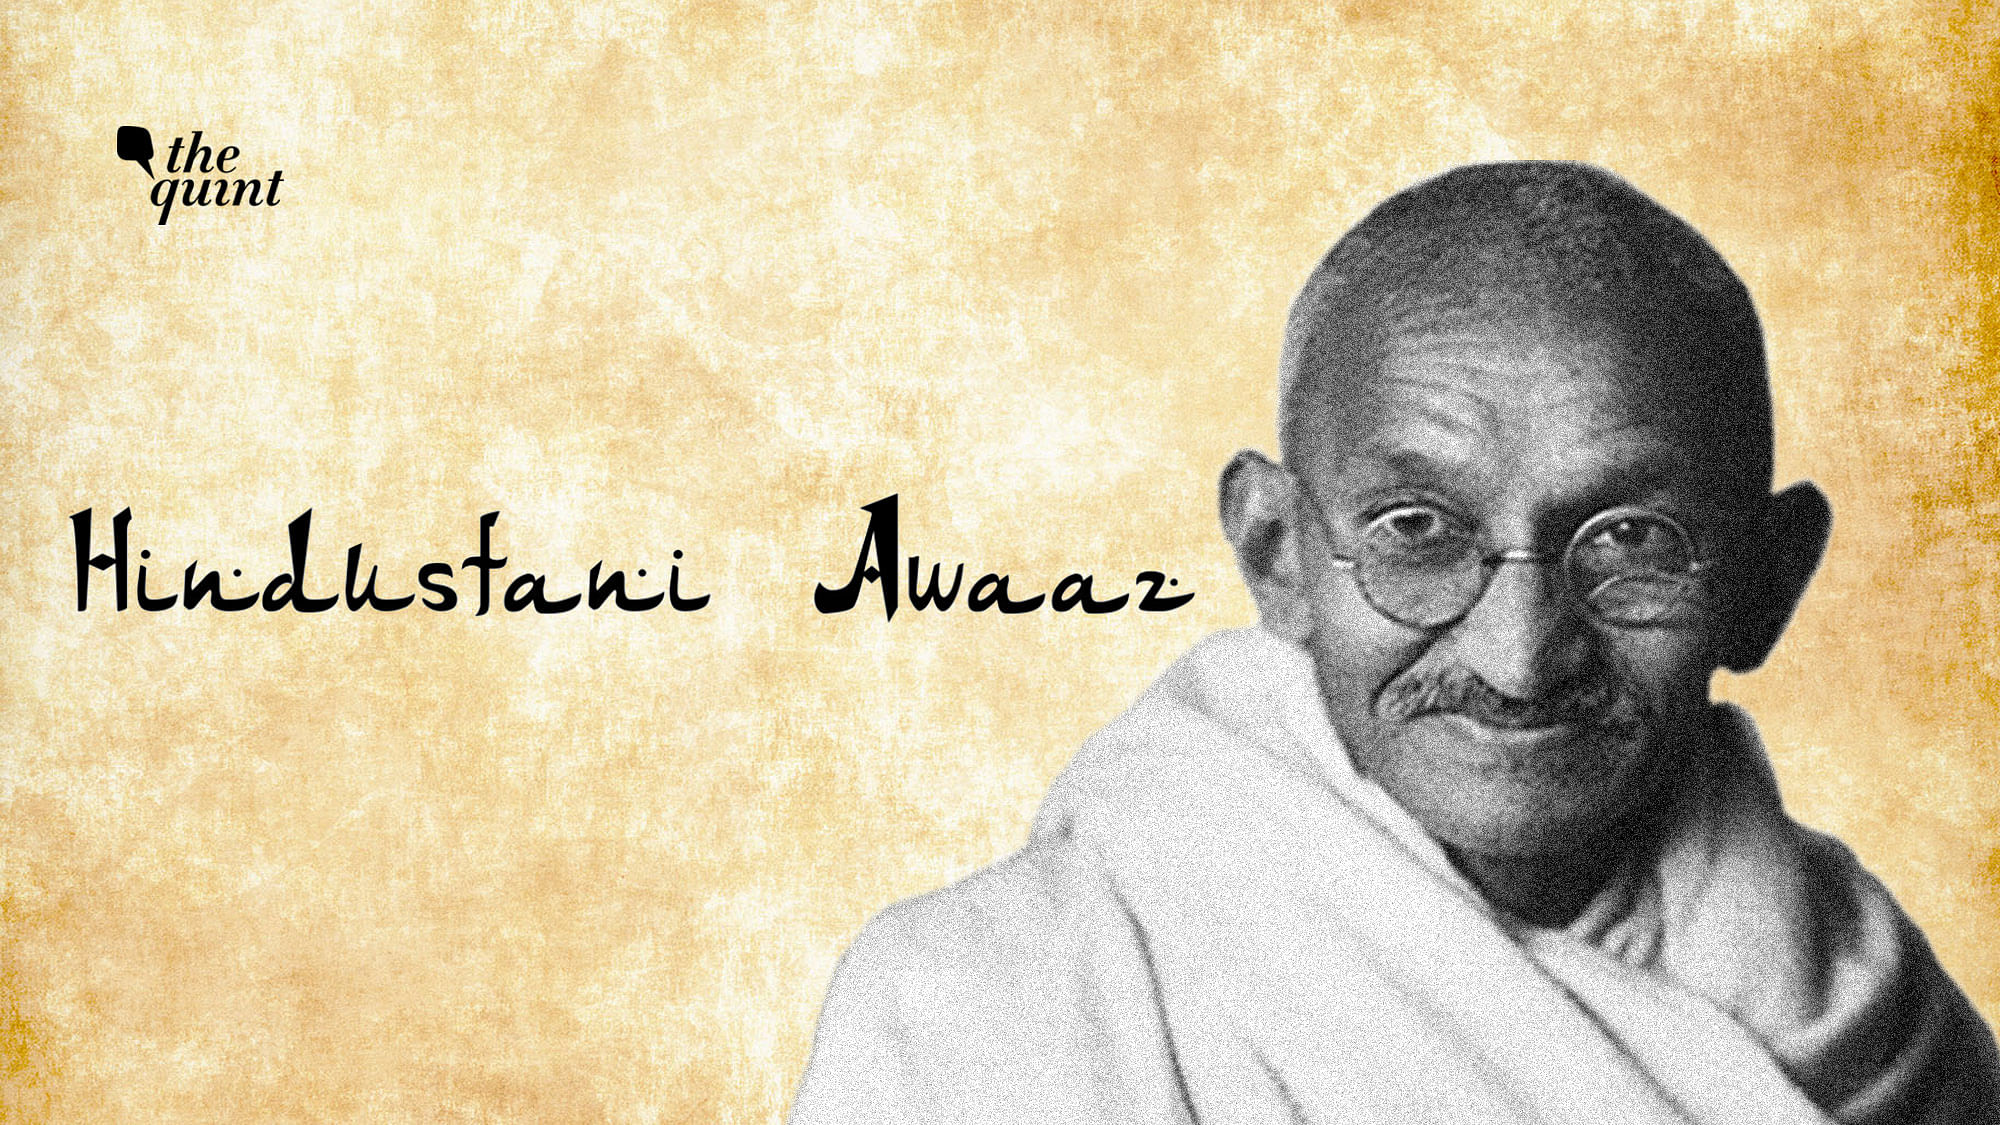 Image of Mahatma Gandhi, and the author of the article, Rakhshanda Jalil’s fornightly column ‘Hindustani Awaaz’s’ branding, used for representational purposes.